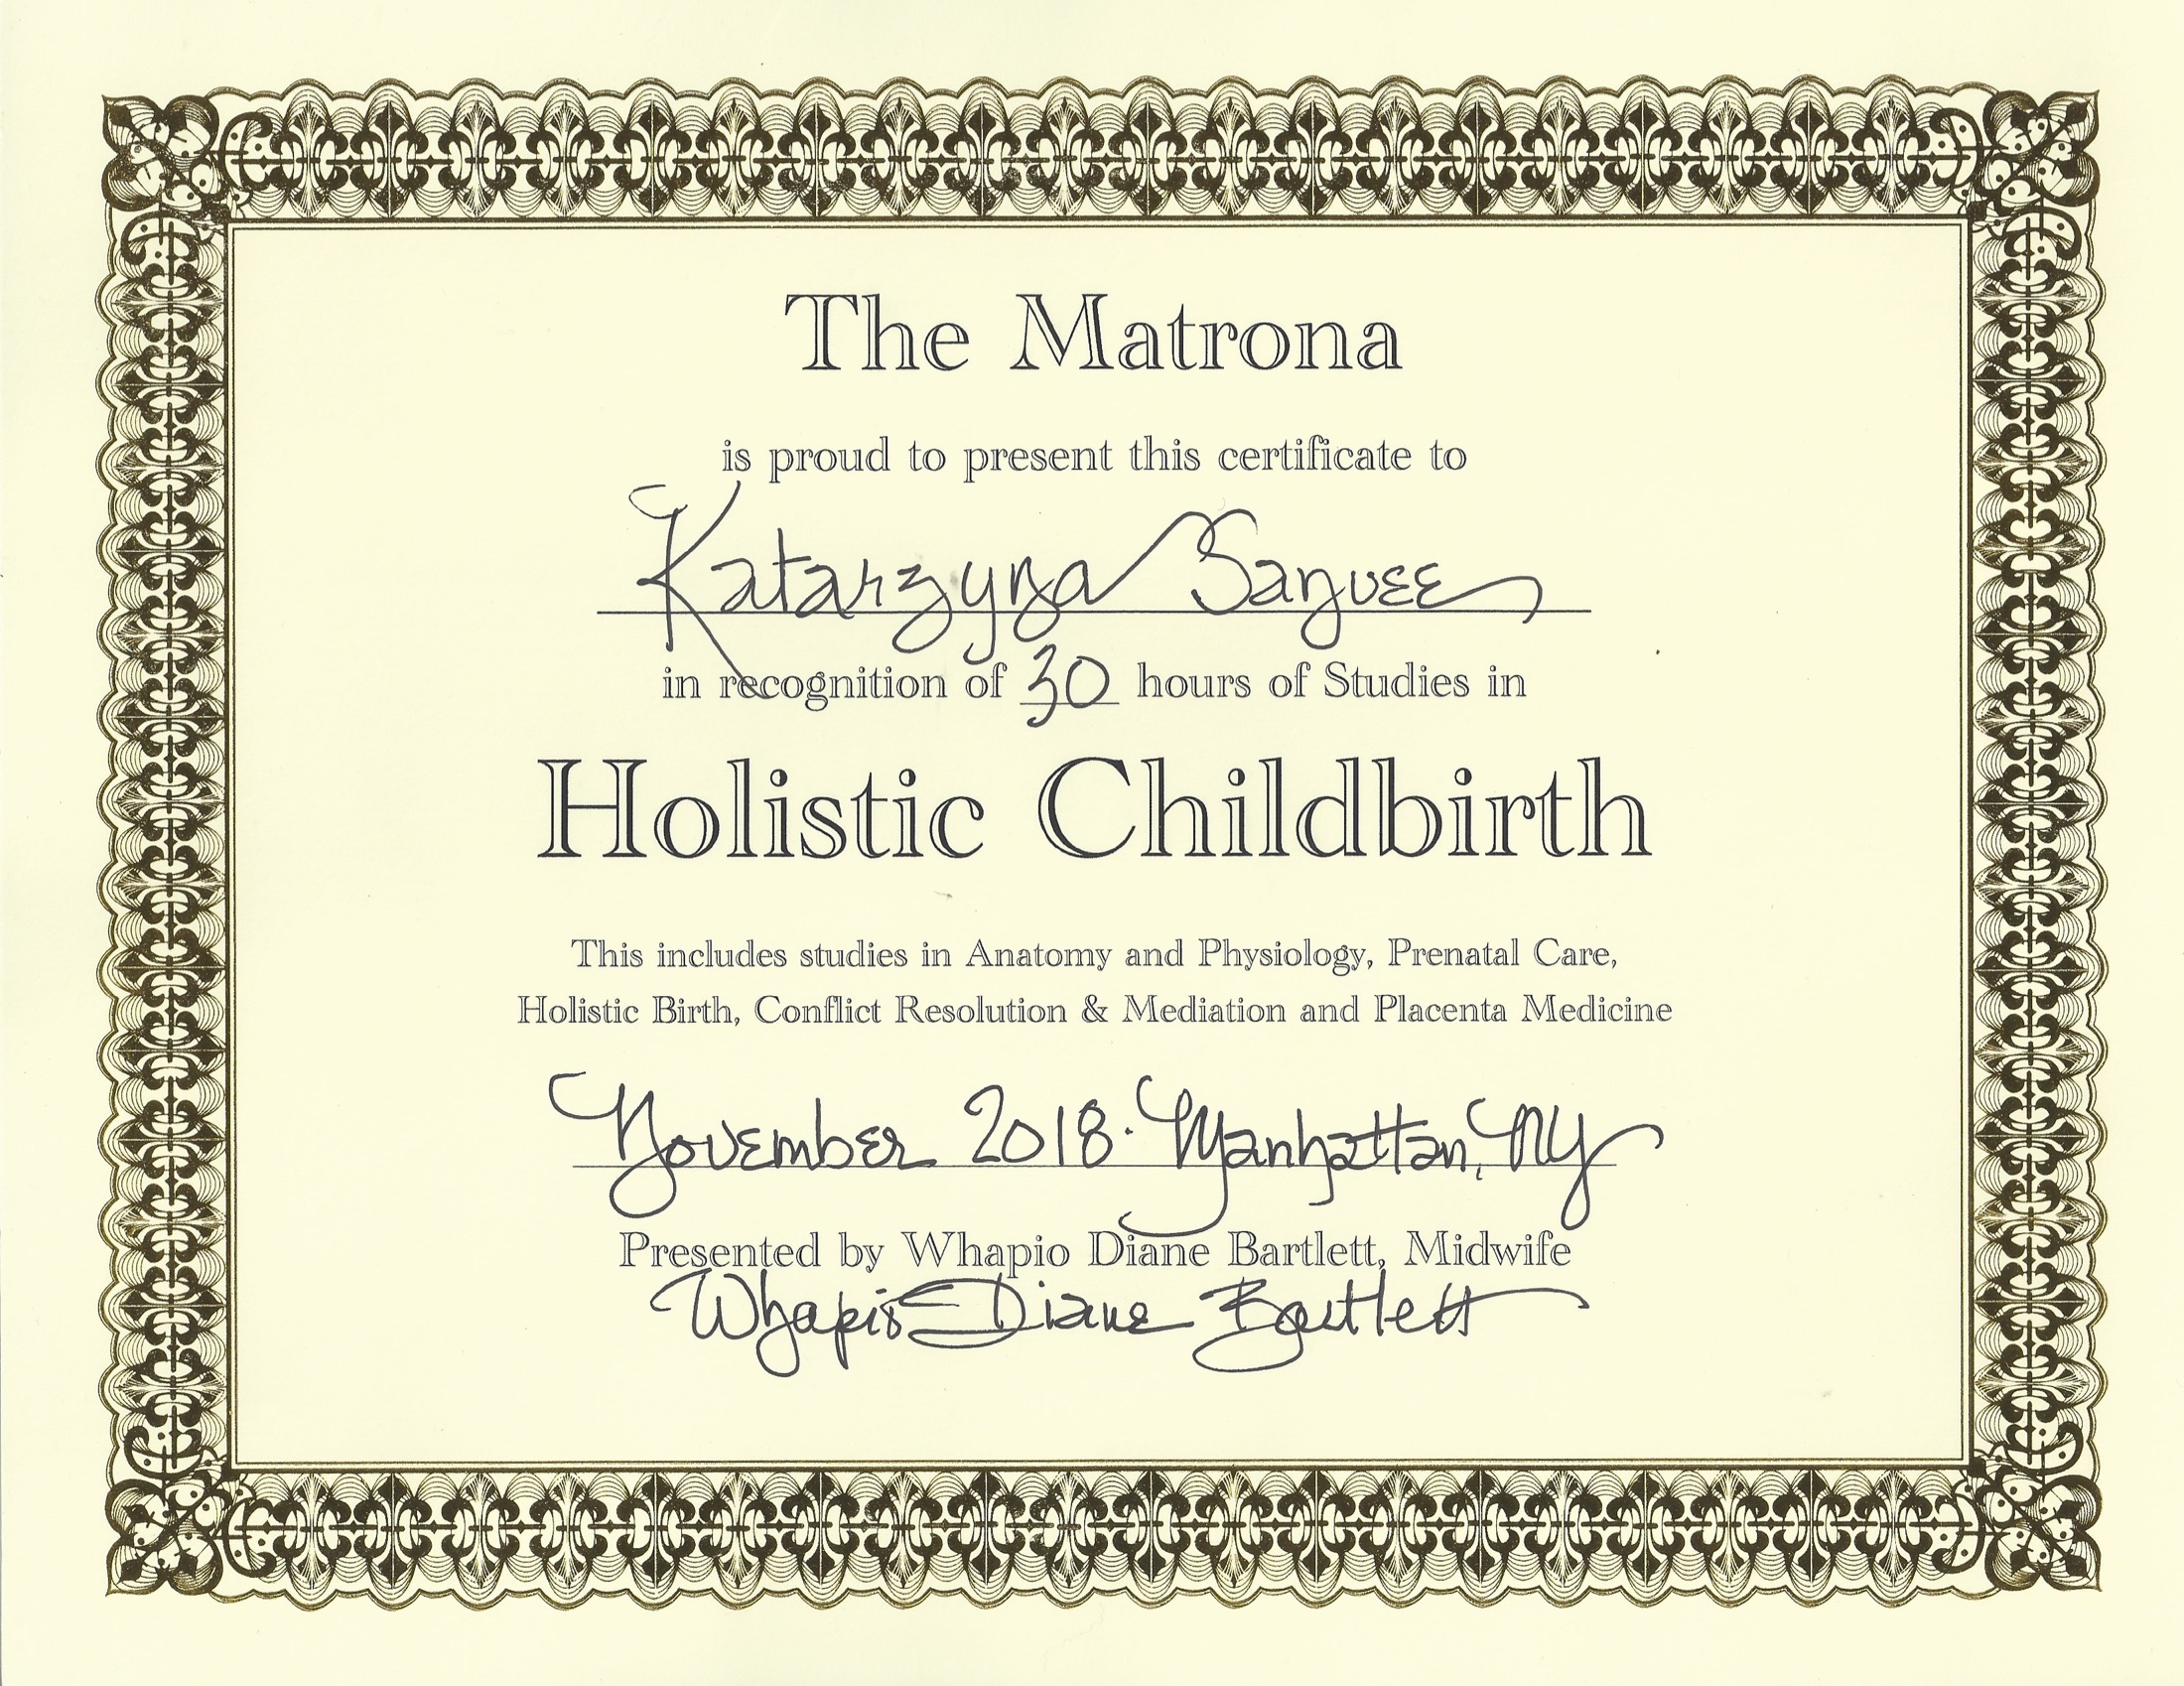 201811_The Matrona_Certification_HolisticChildbirth.jpg